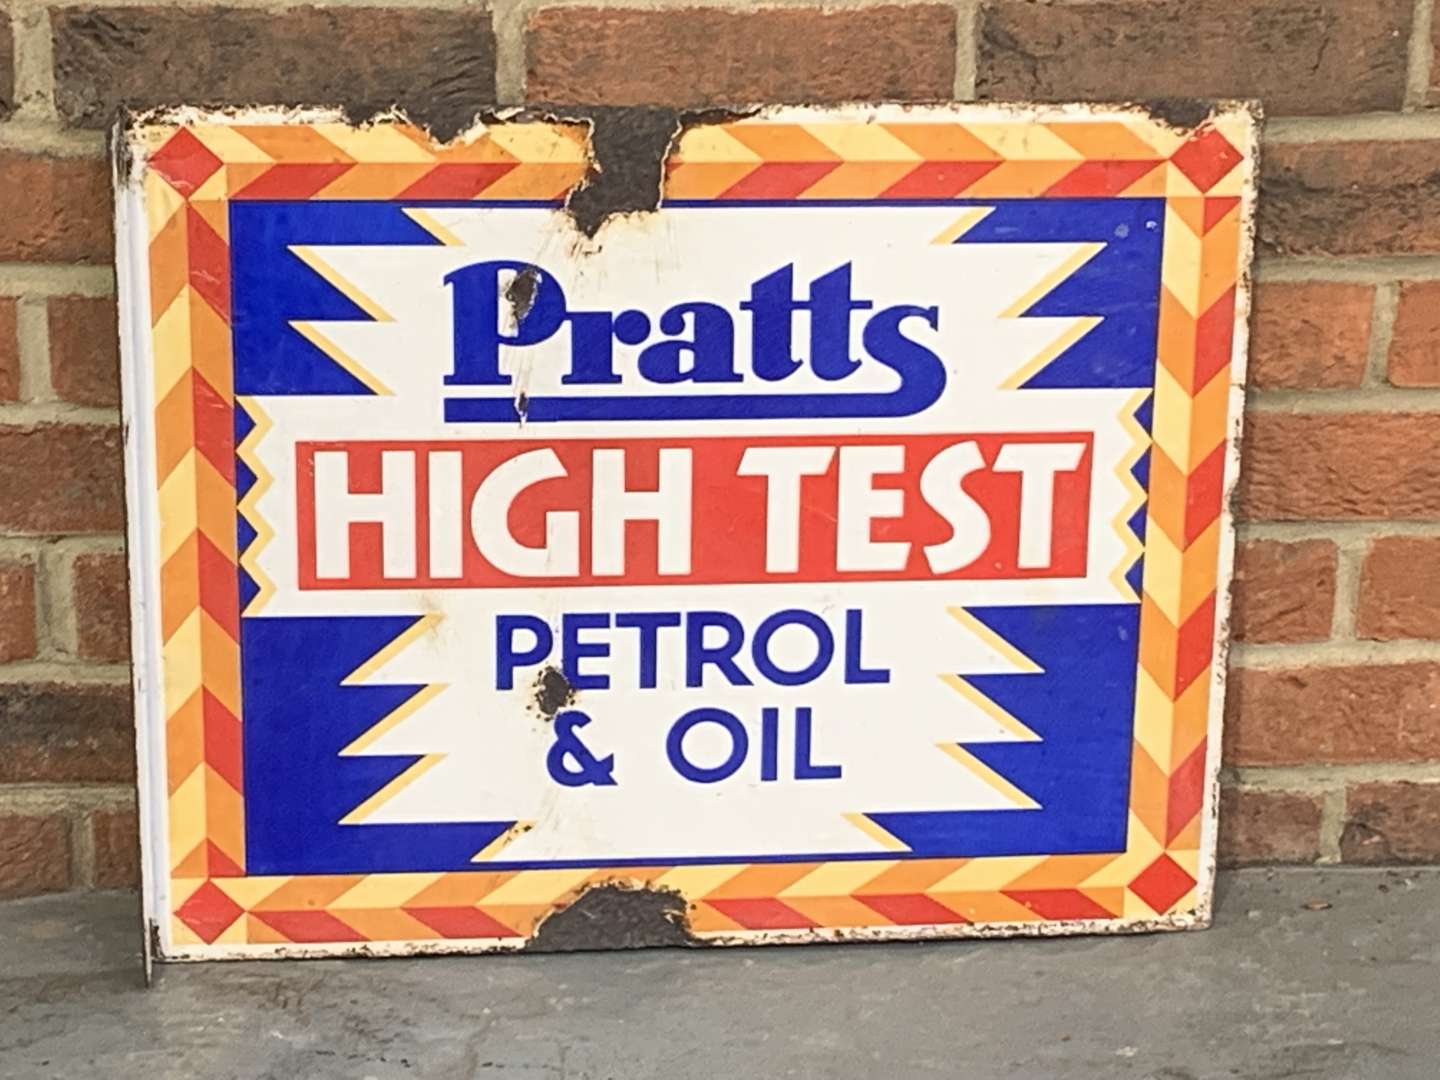 <p>Pratts High Test Petrol and Oil Enamel Flange Sign</p>